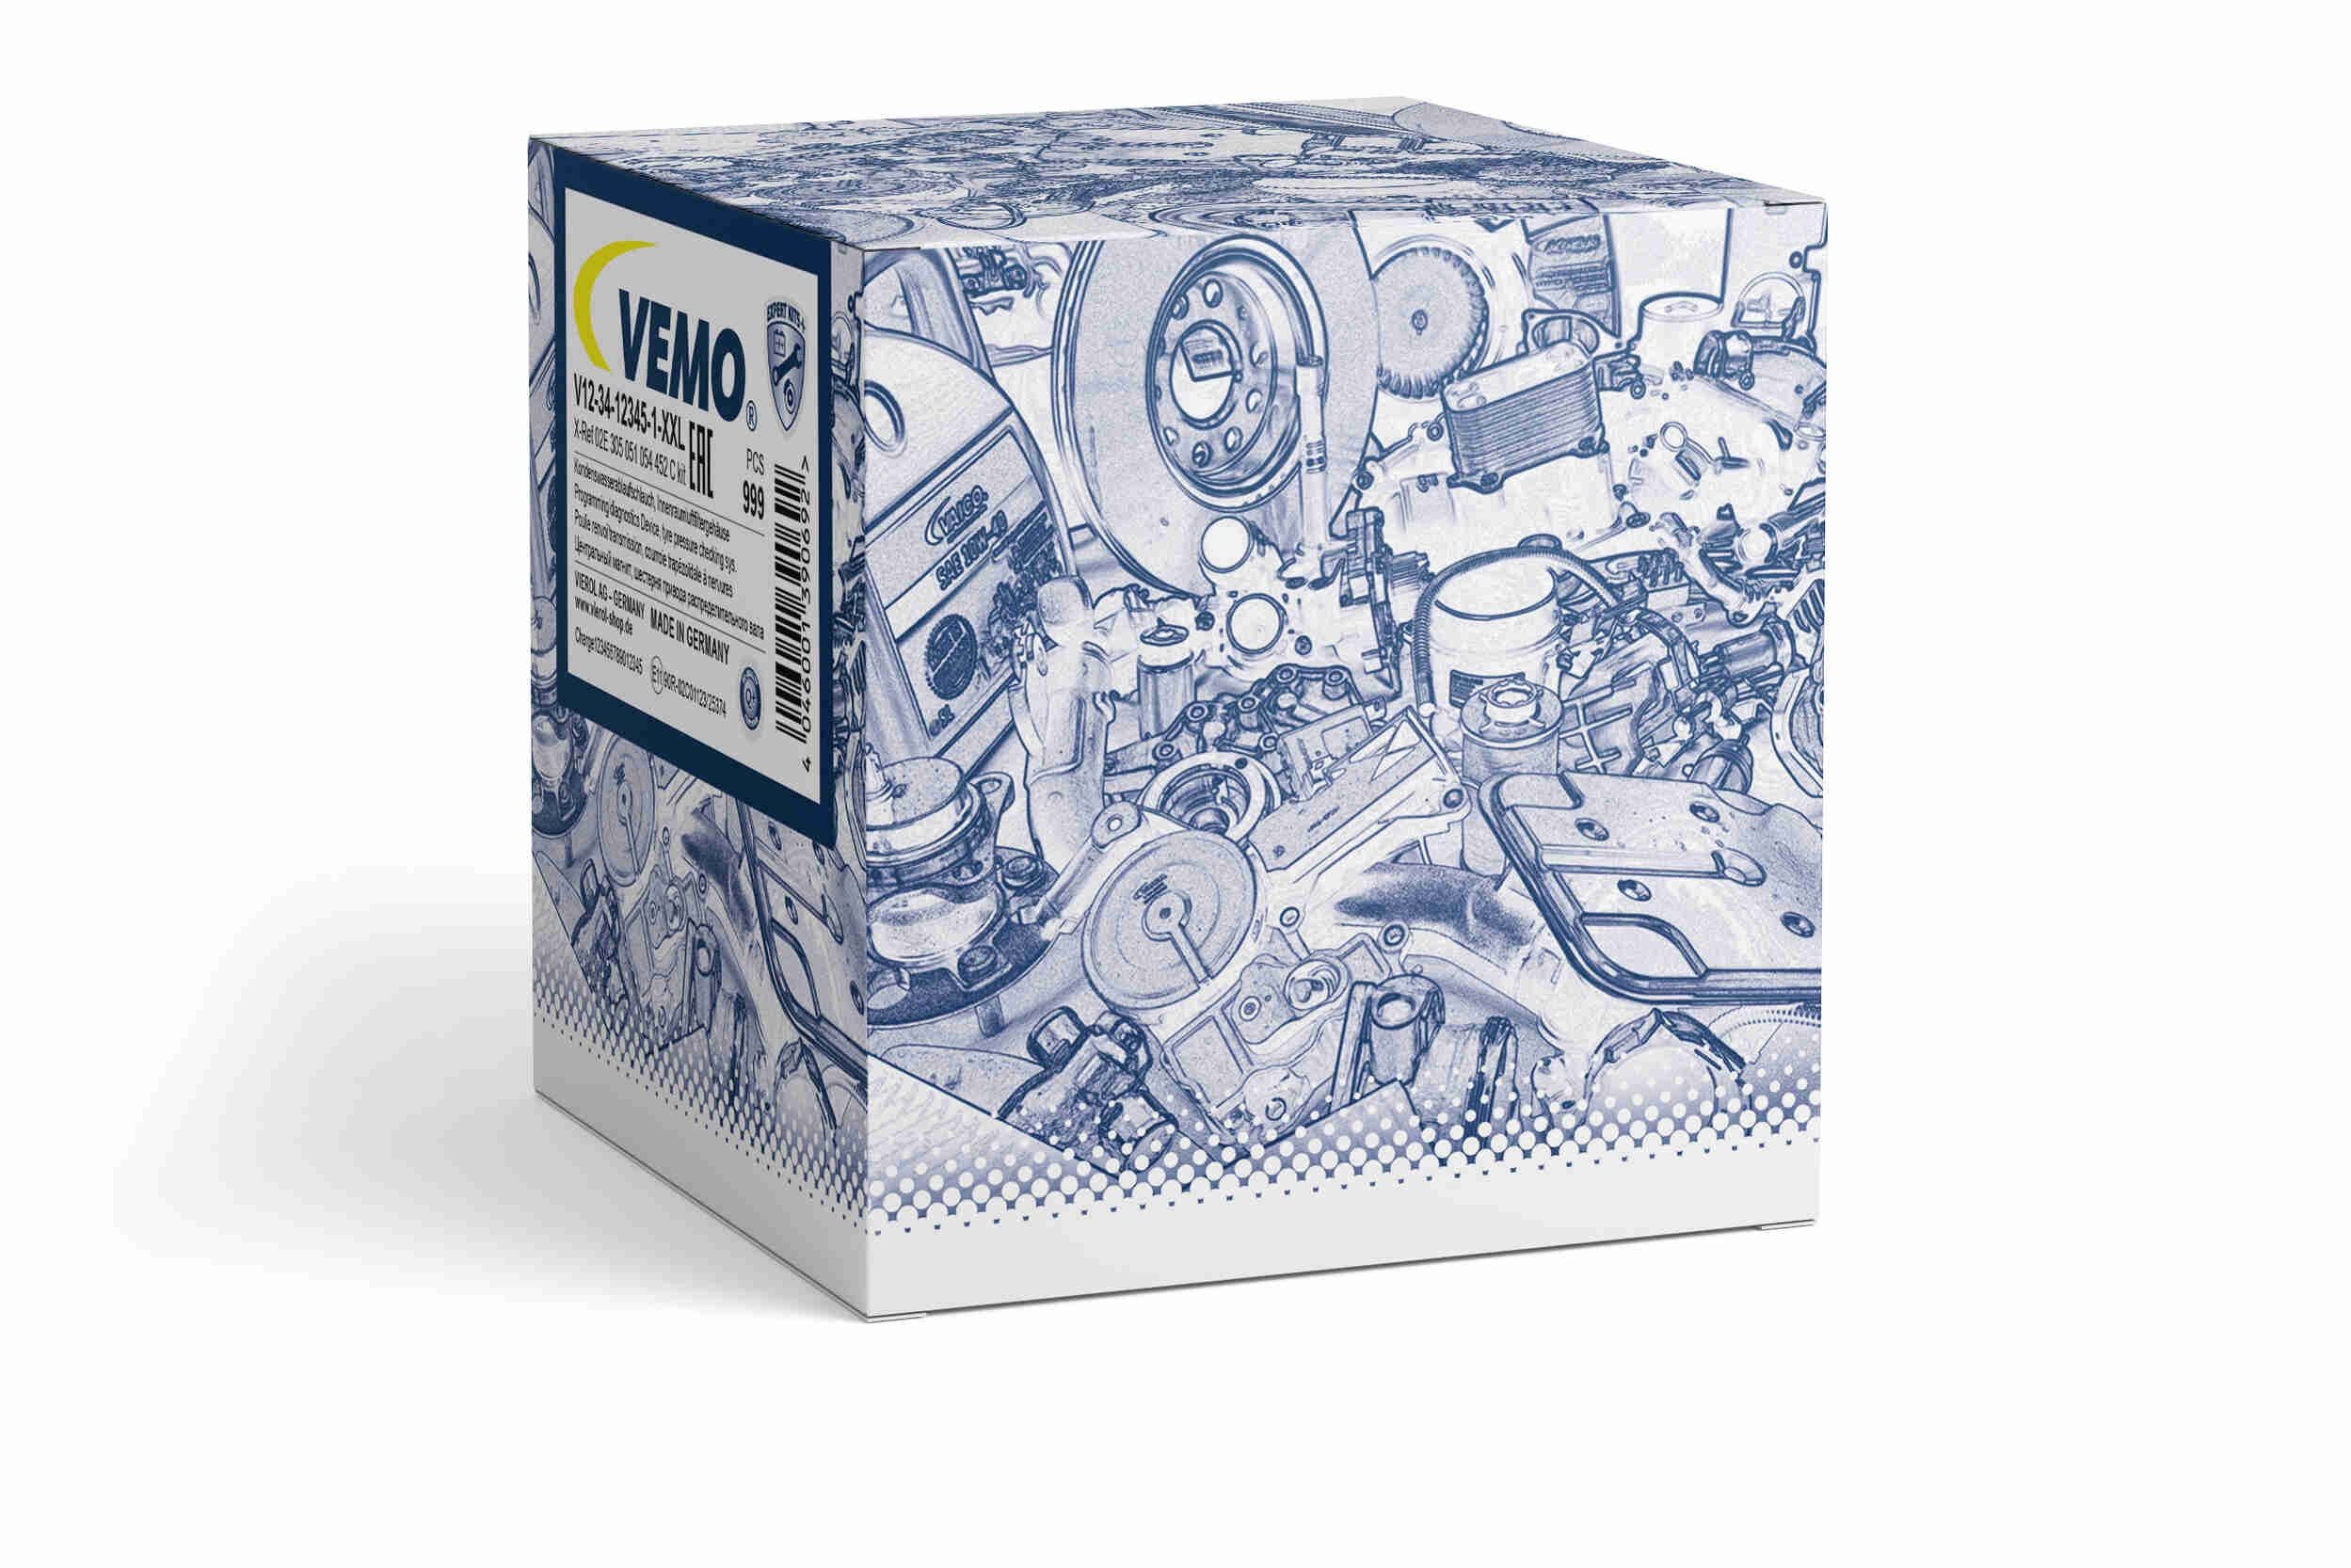 VEMO V10-72-1292 Fuel rail pressure sensor Q+, original equipment manufacturer quality